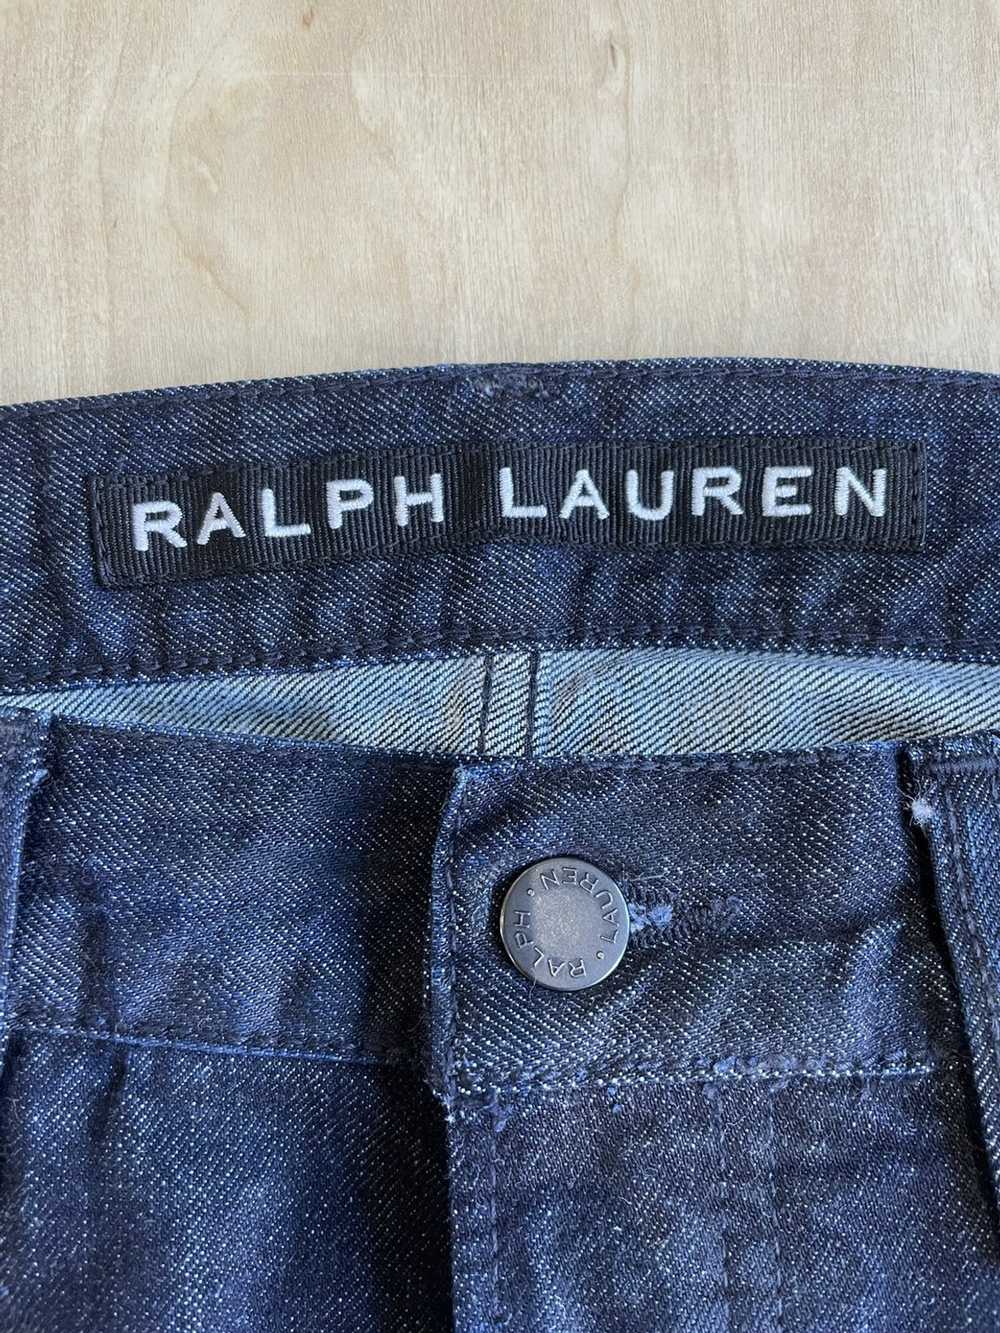 Ralph Lauren Black Label Jeans Classic Fit Dark W… - image 4